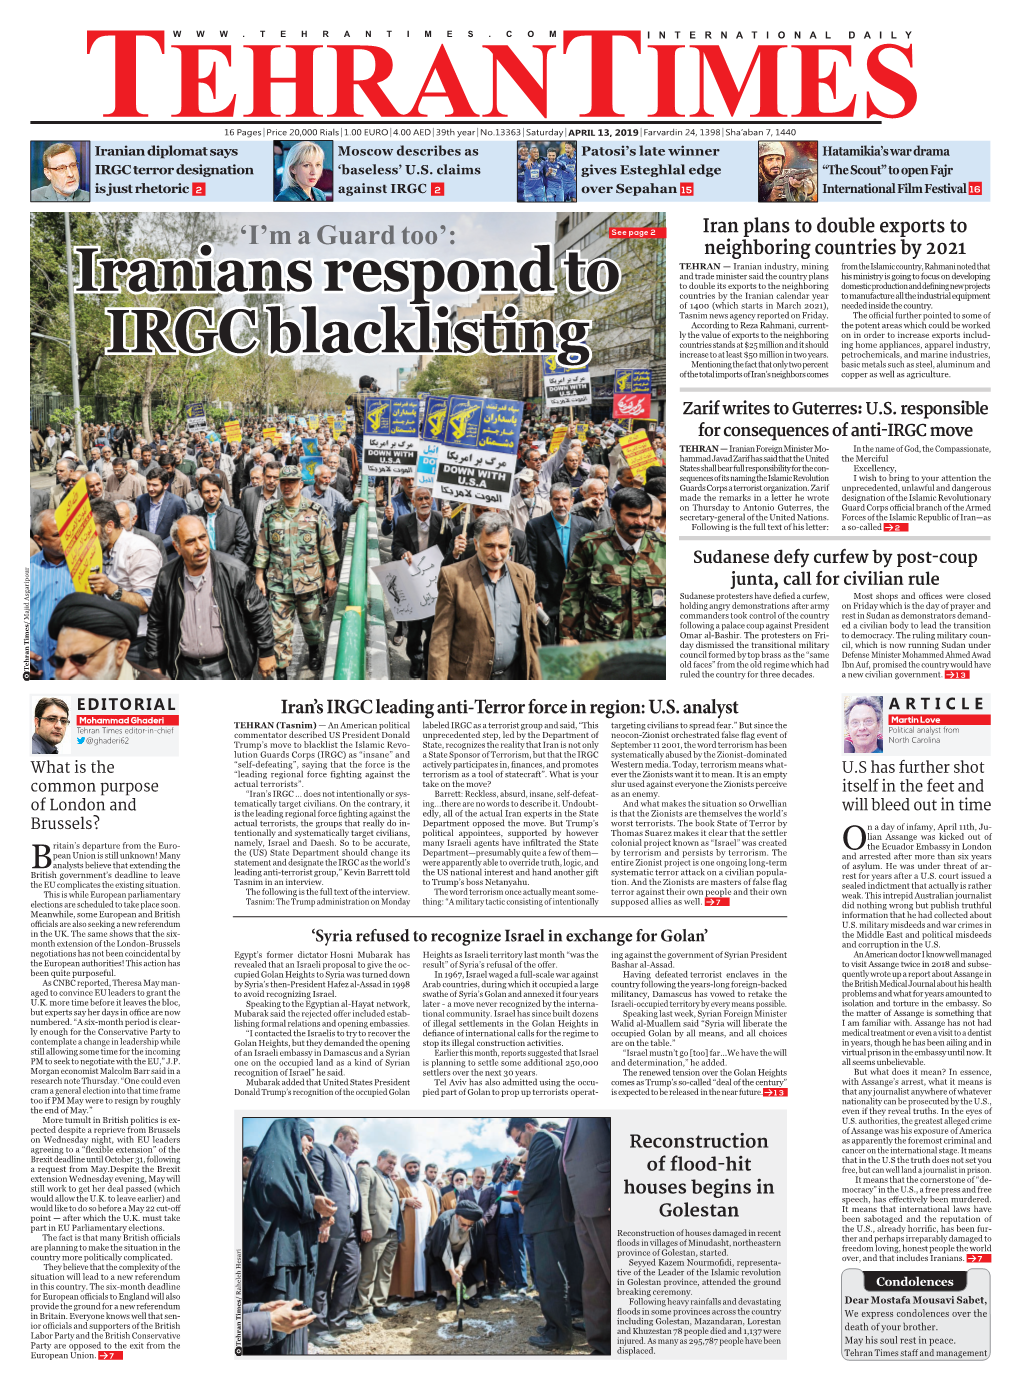 Iranians Respond to IRGC Blacklisting